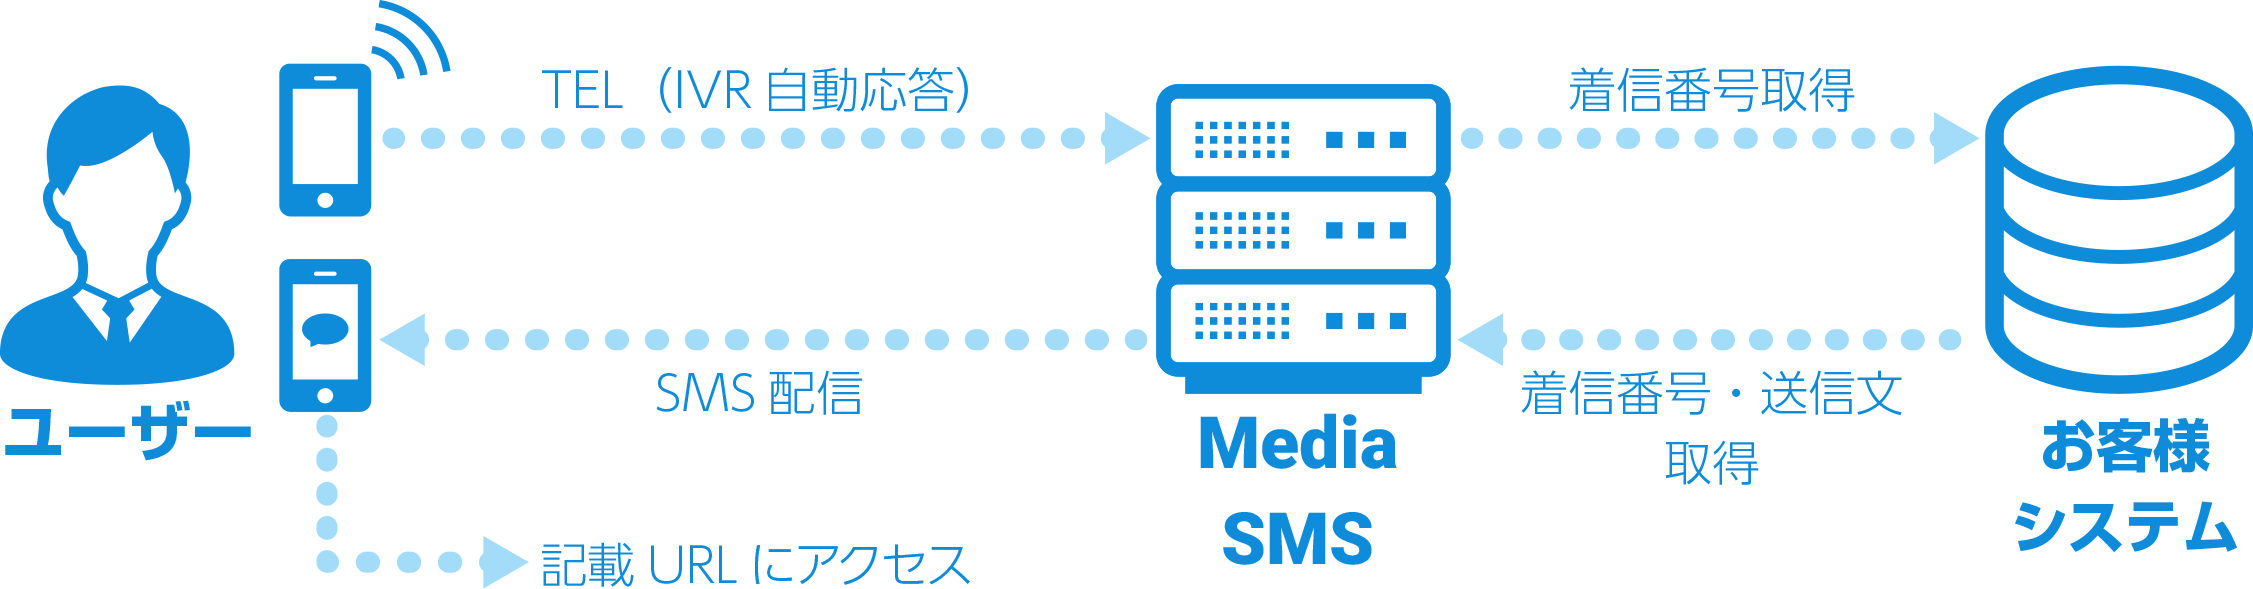 IVR連携SMS送信の図